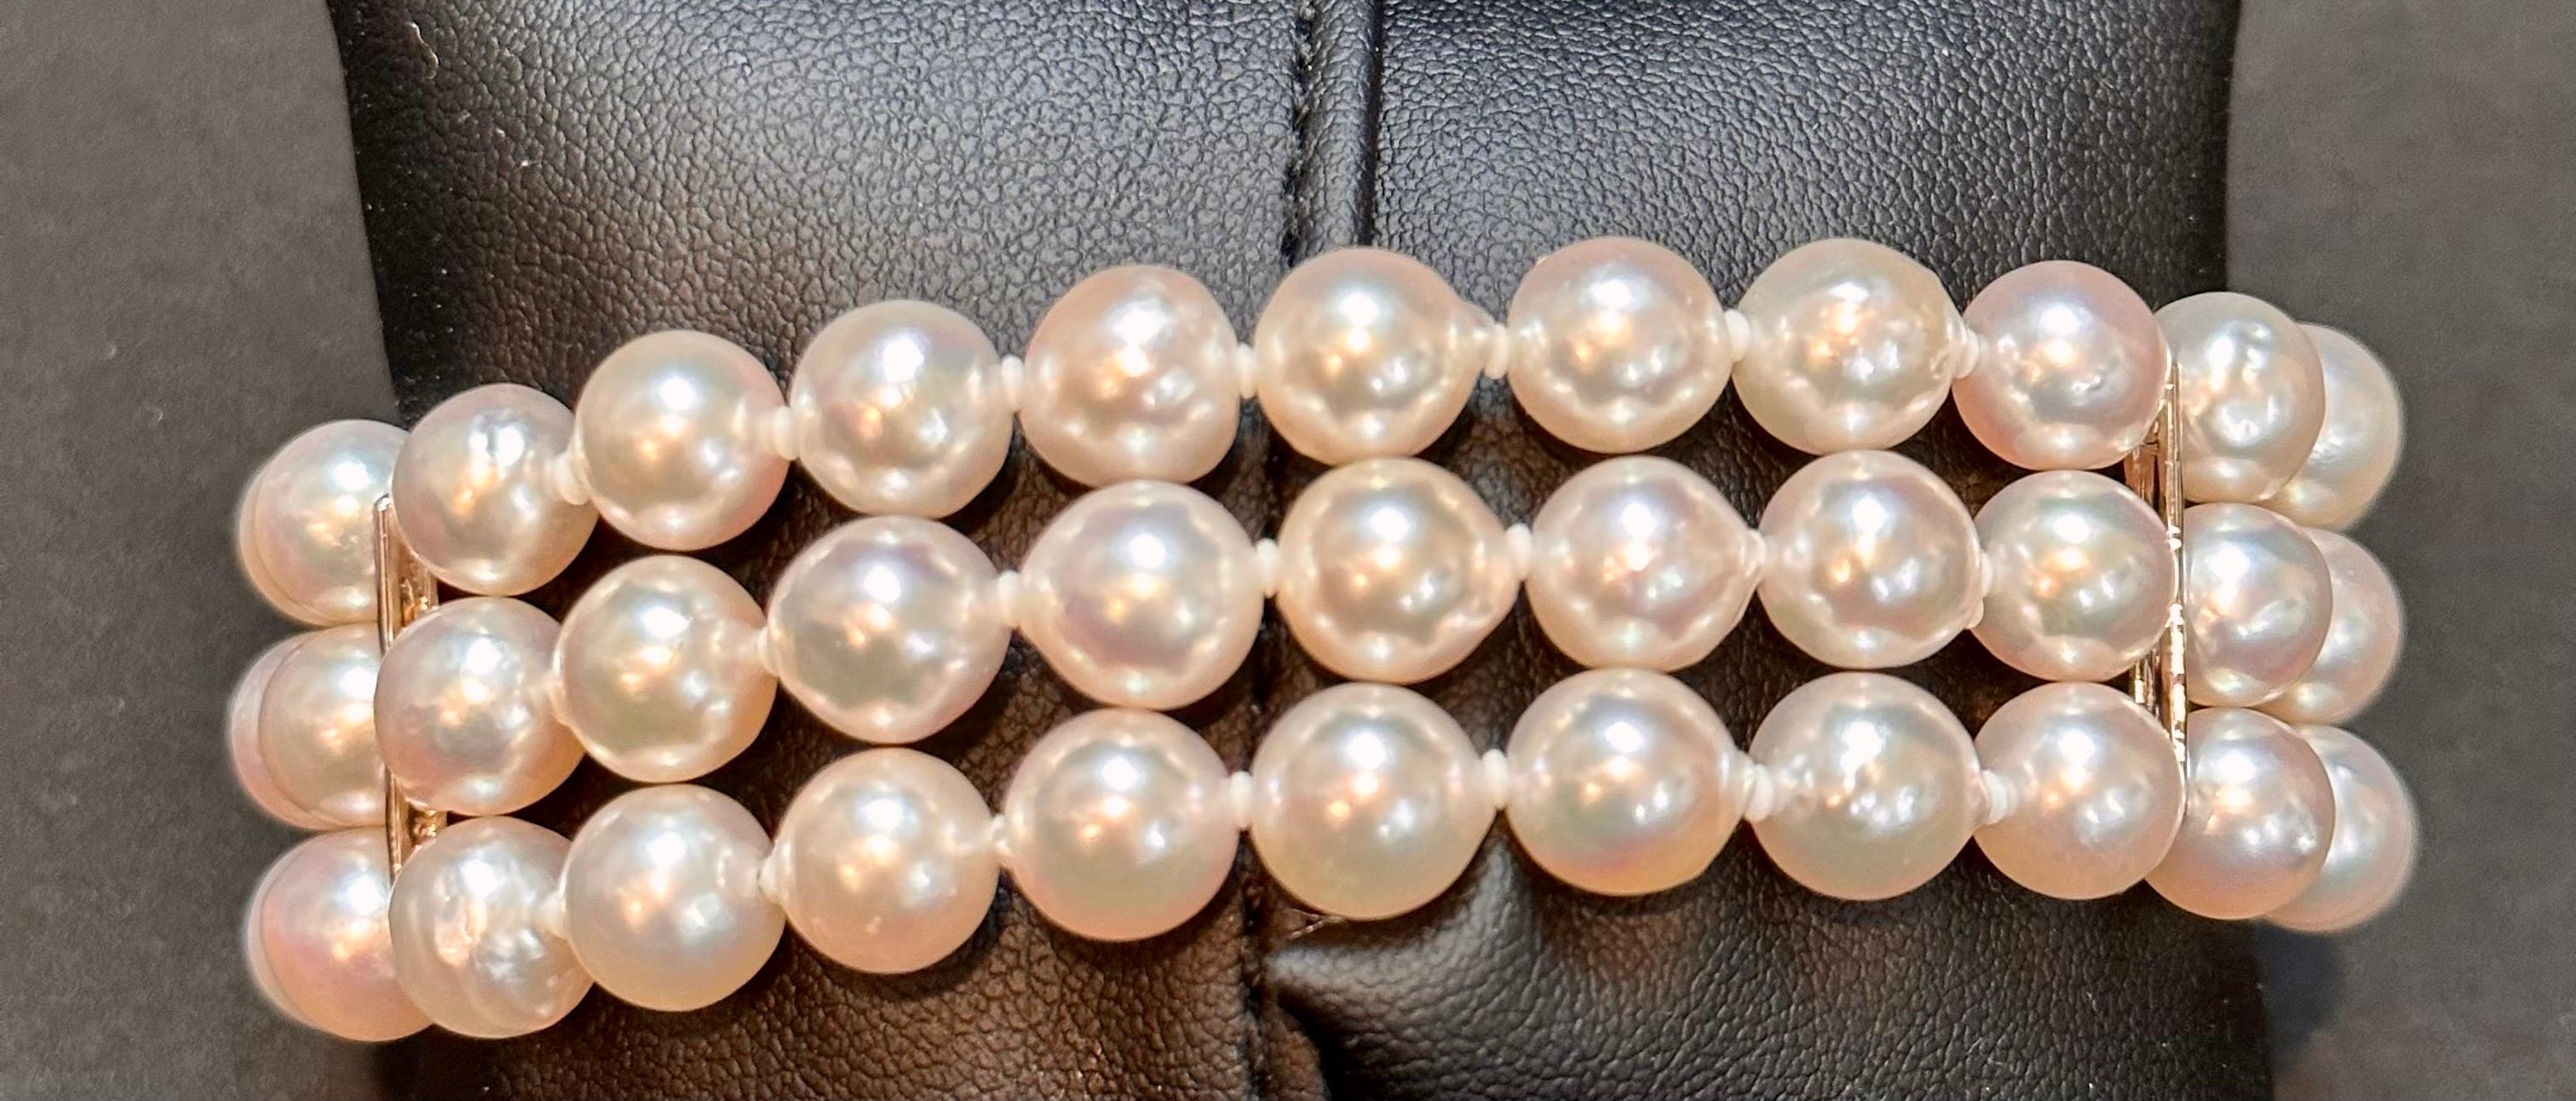 8 inch pearl bracelet